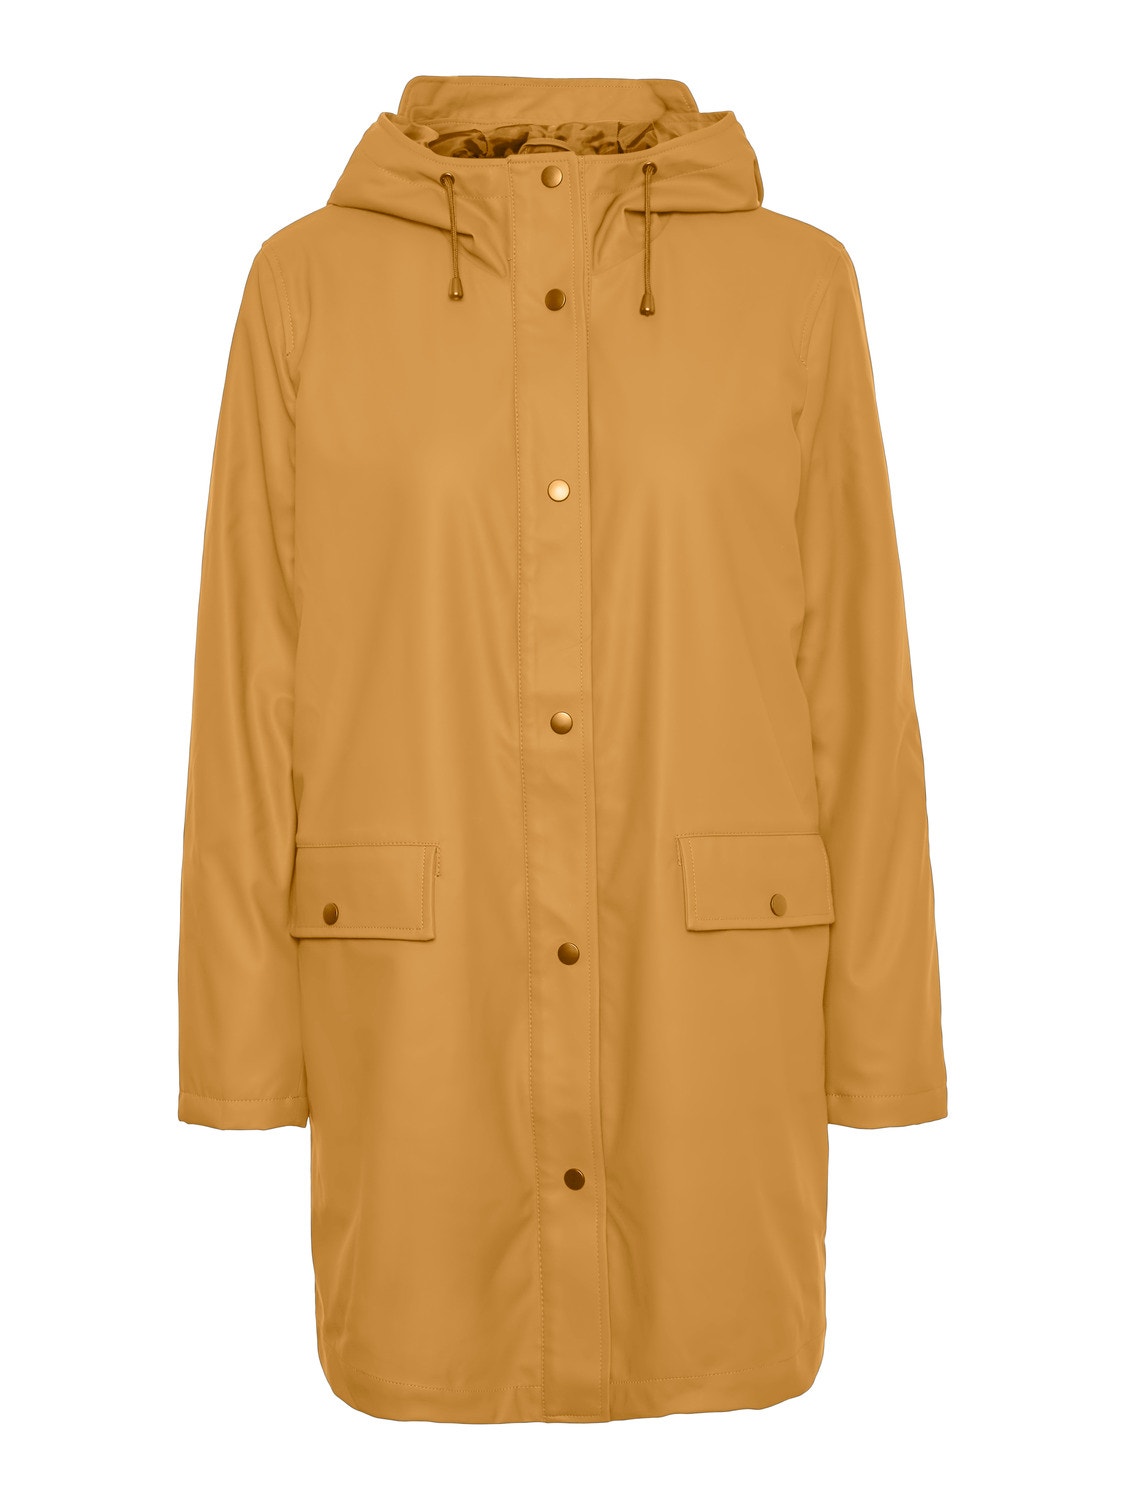 Vero Moda VMASTA Raincoat -Amber Gold - 10249634